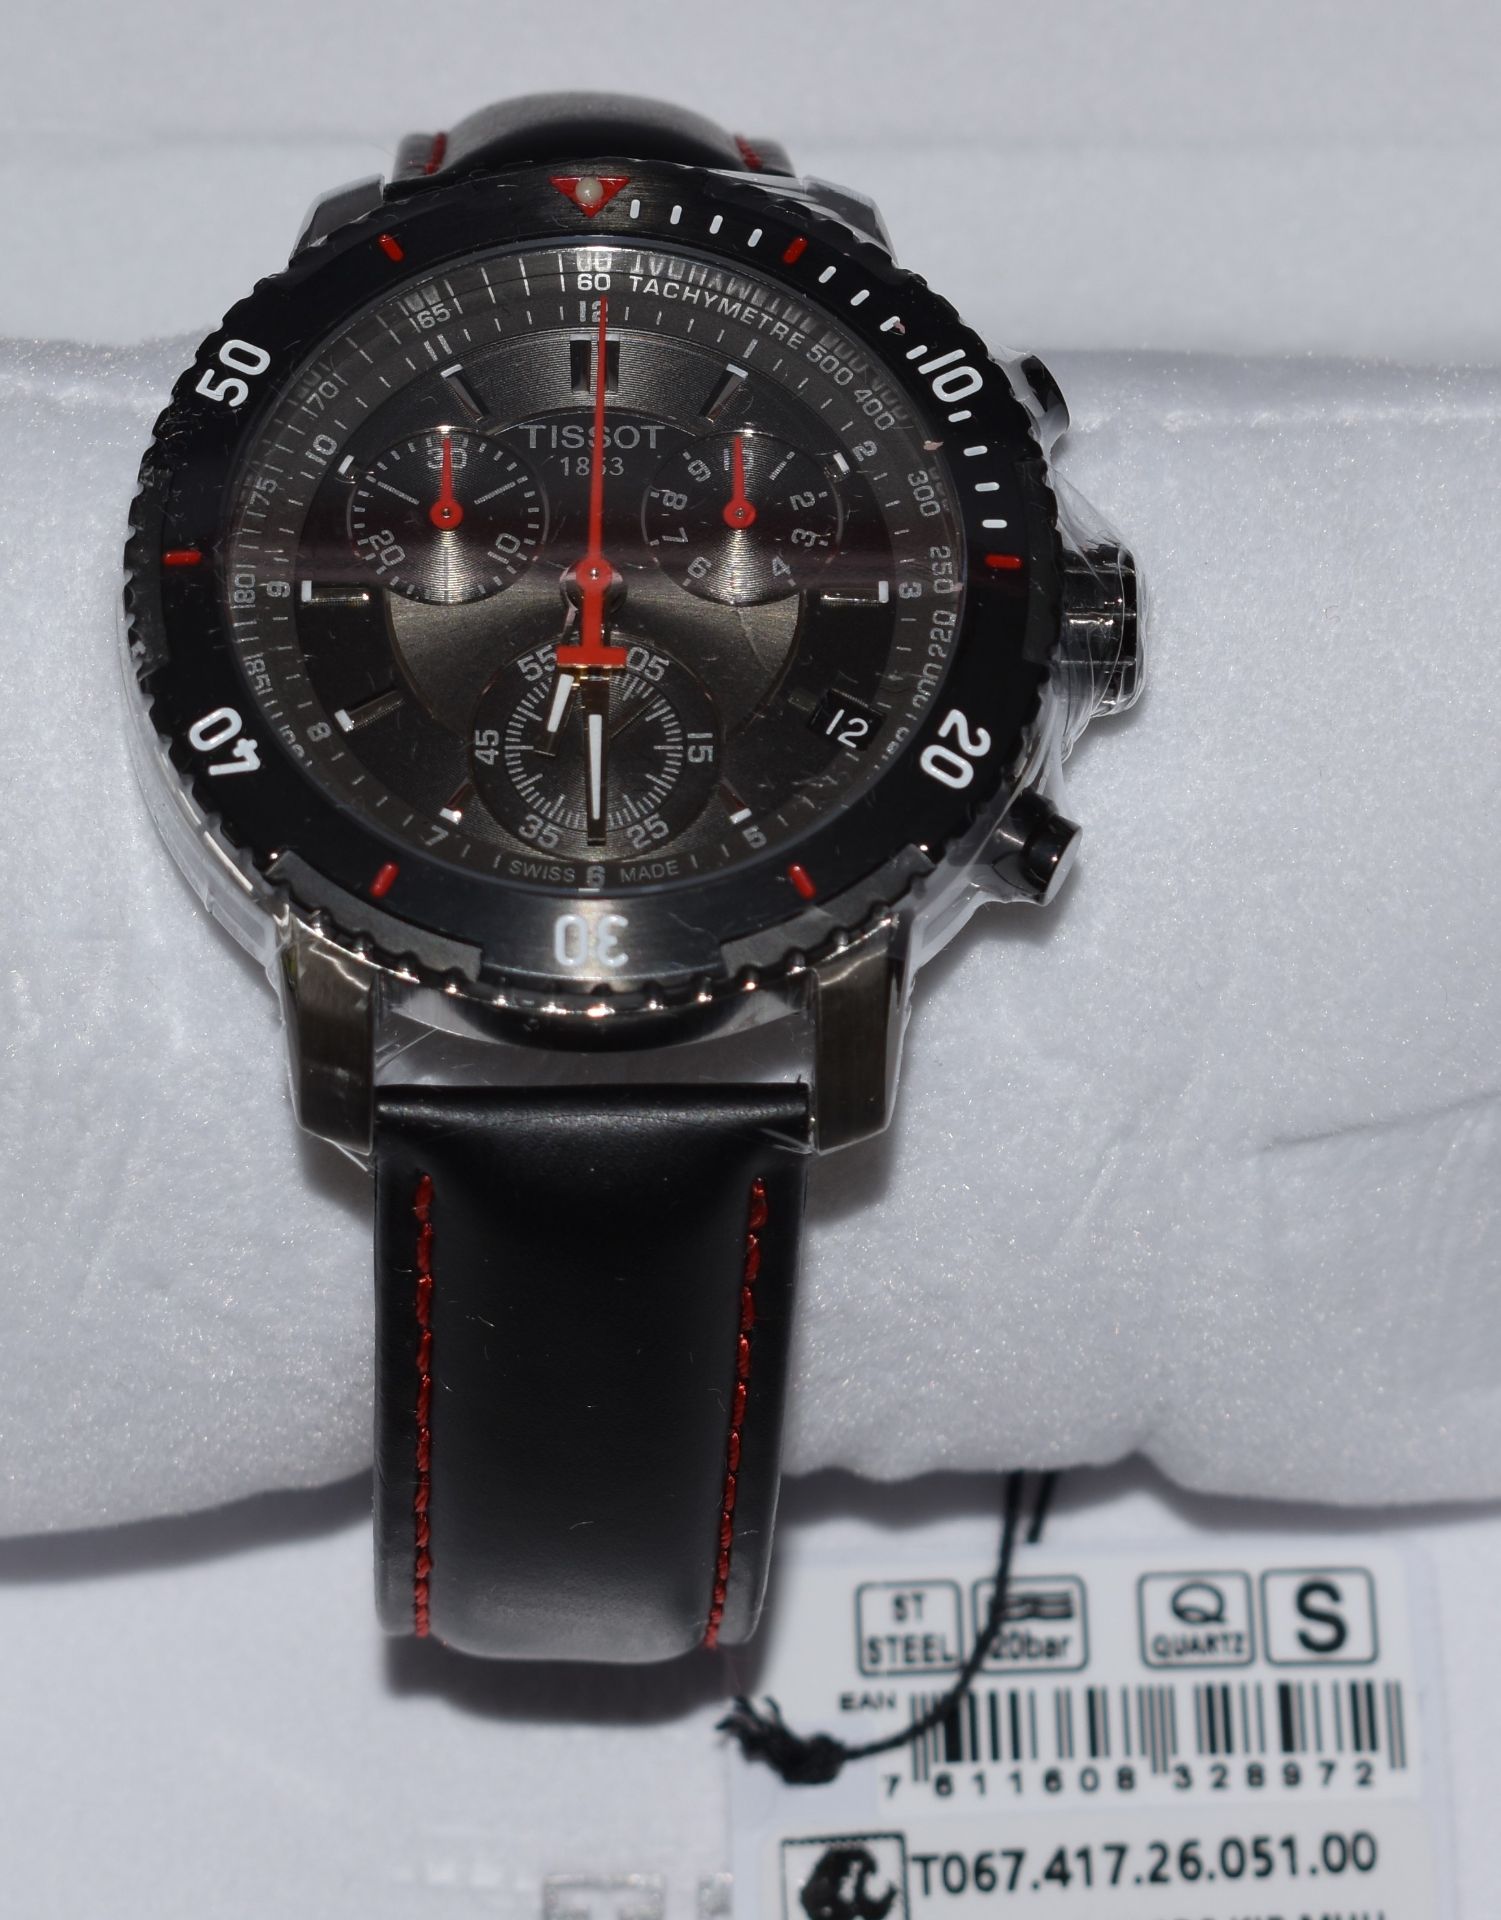 Tissot Men's watch TO67.417.26.051.00 - Image 2 of 3